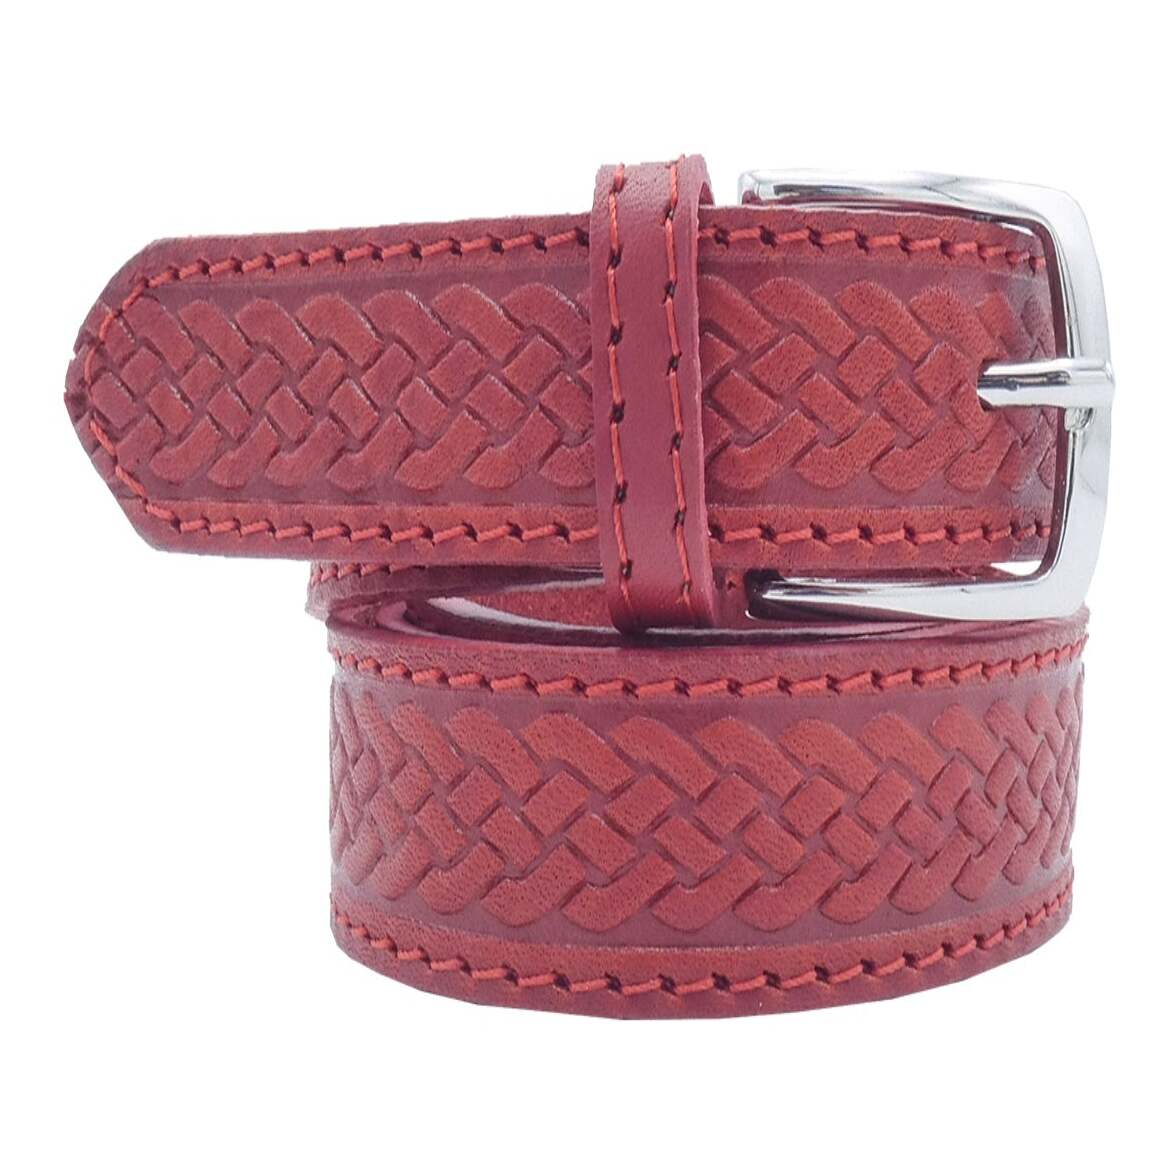 Hand-printed Raffaello leather belt with handcrafted satin zamak buckle